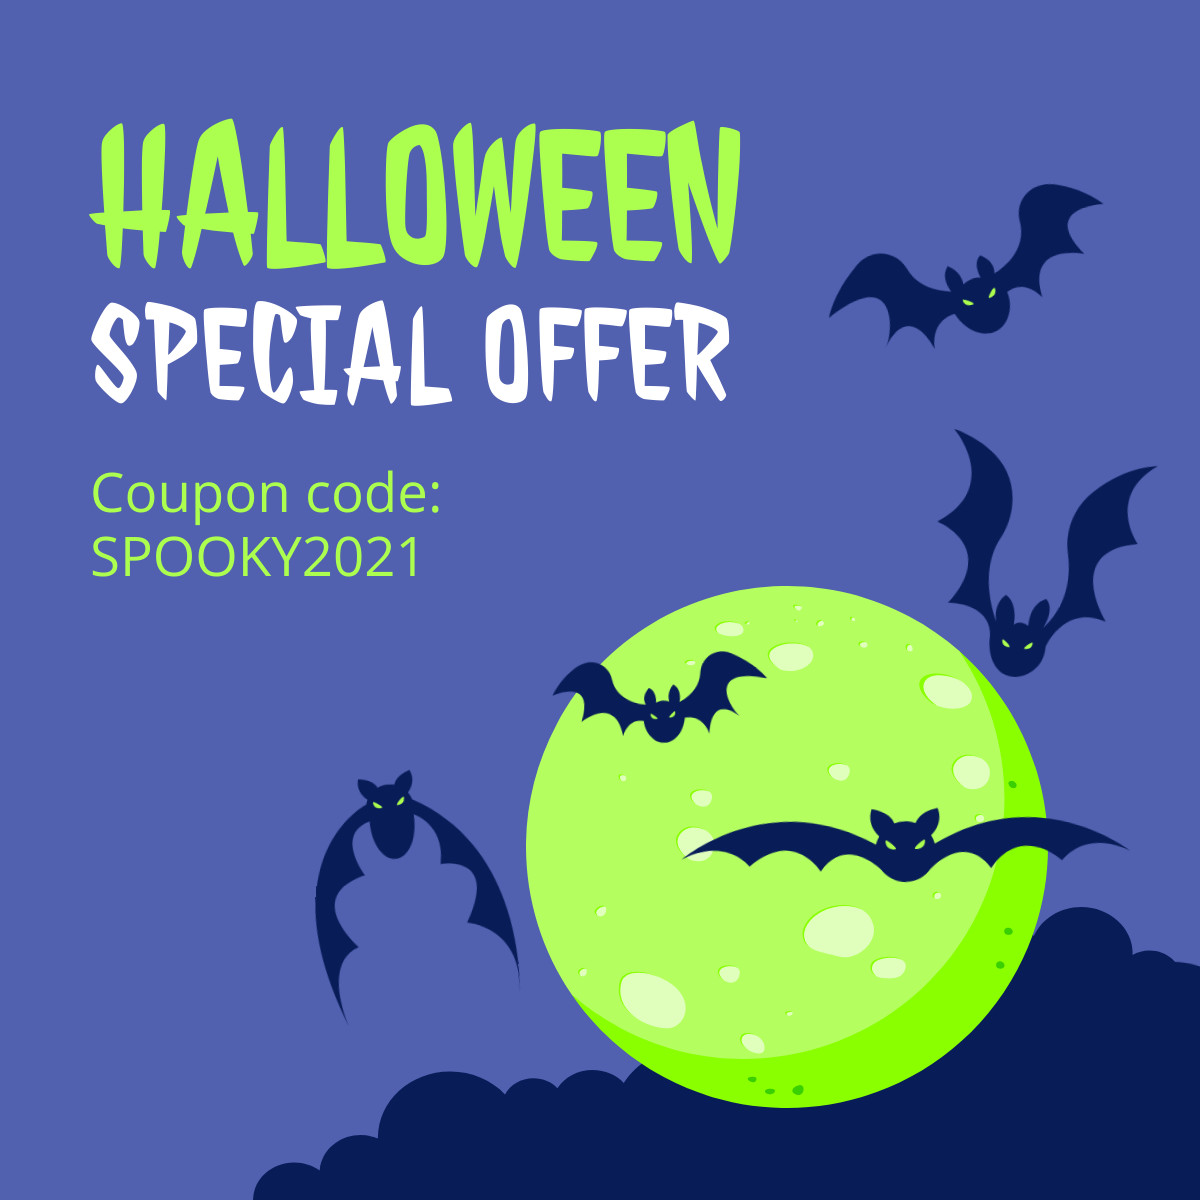 Halloween Special Offer